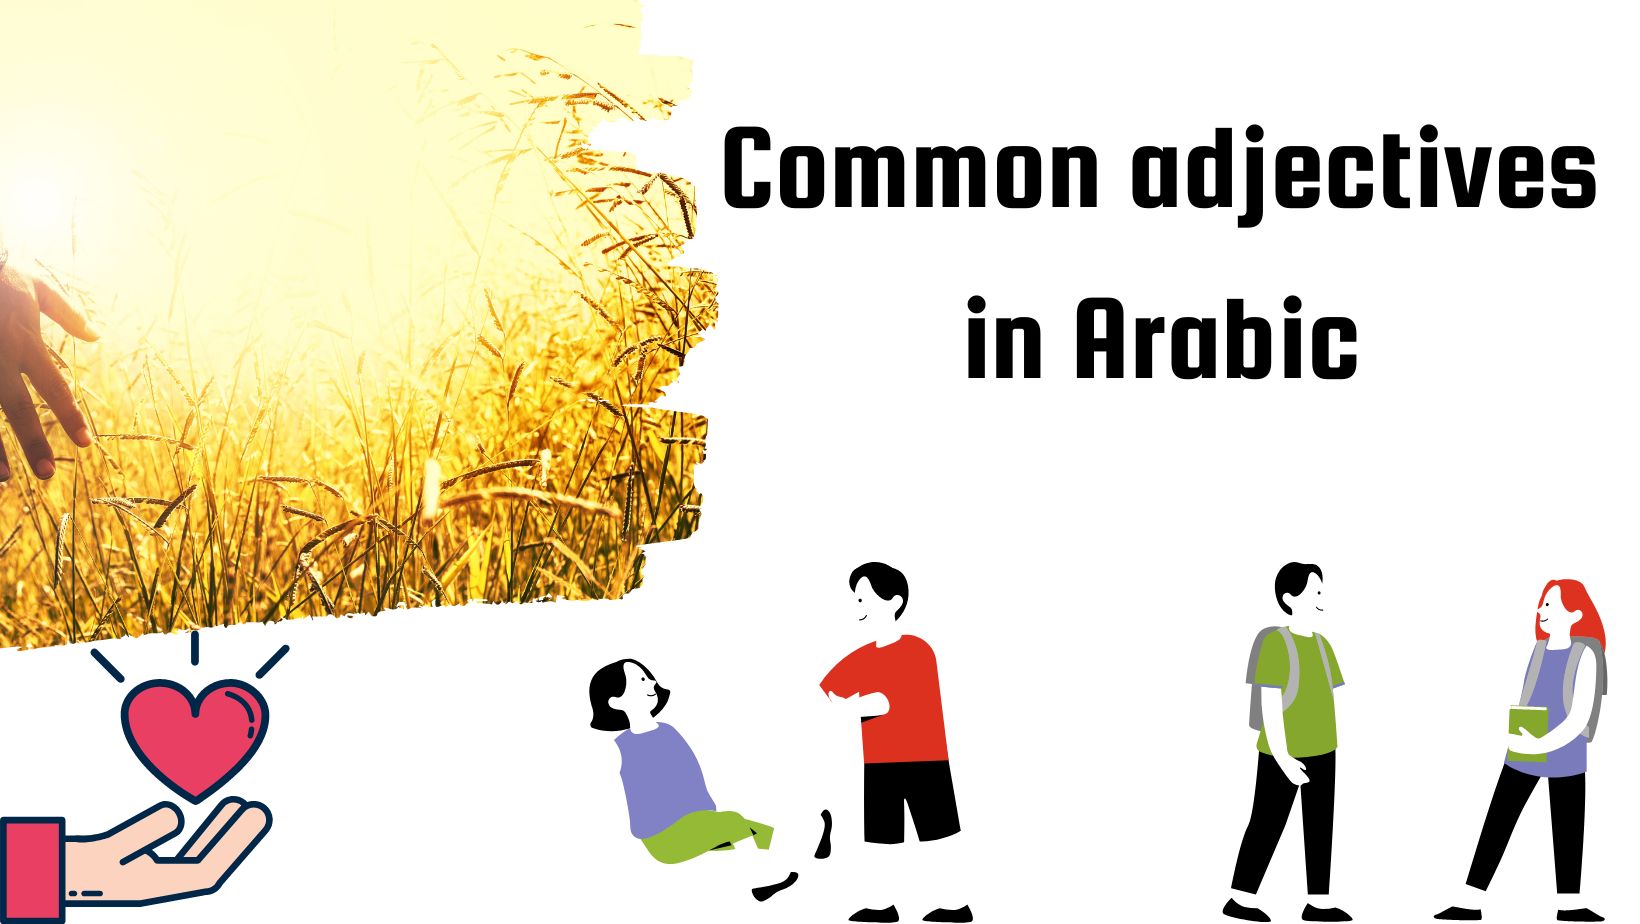 Common adjectives in Arabic Language